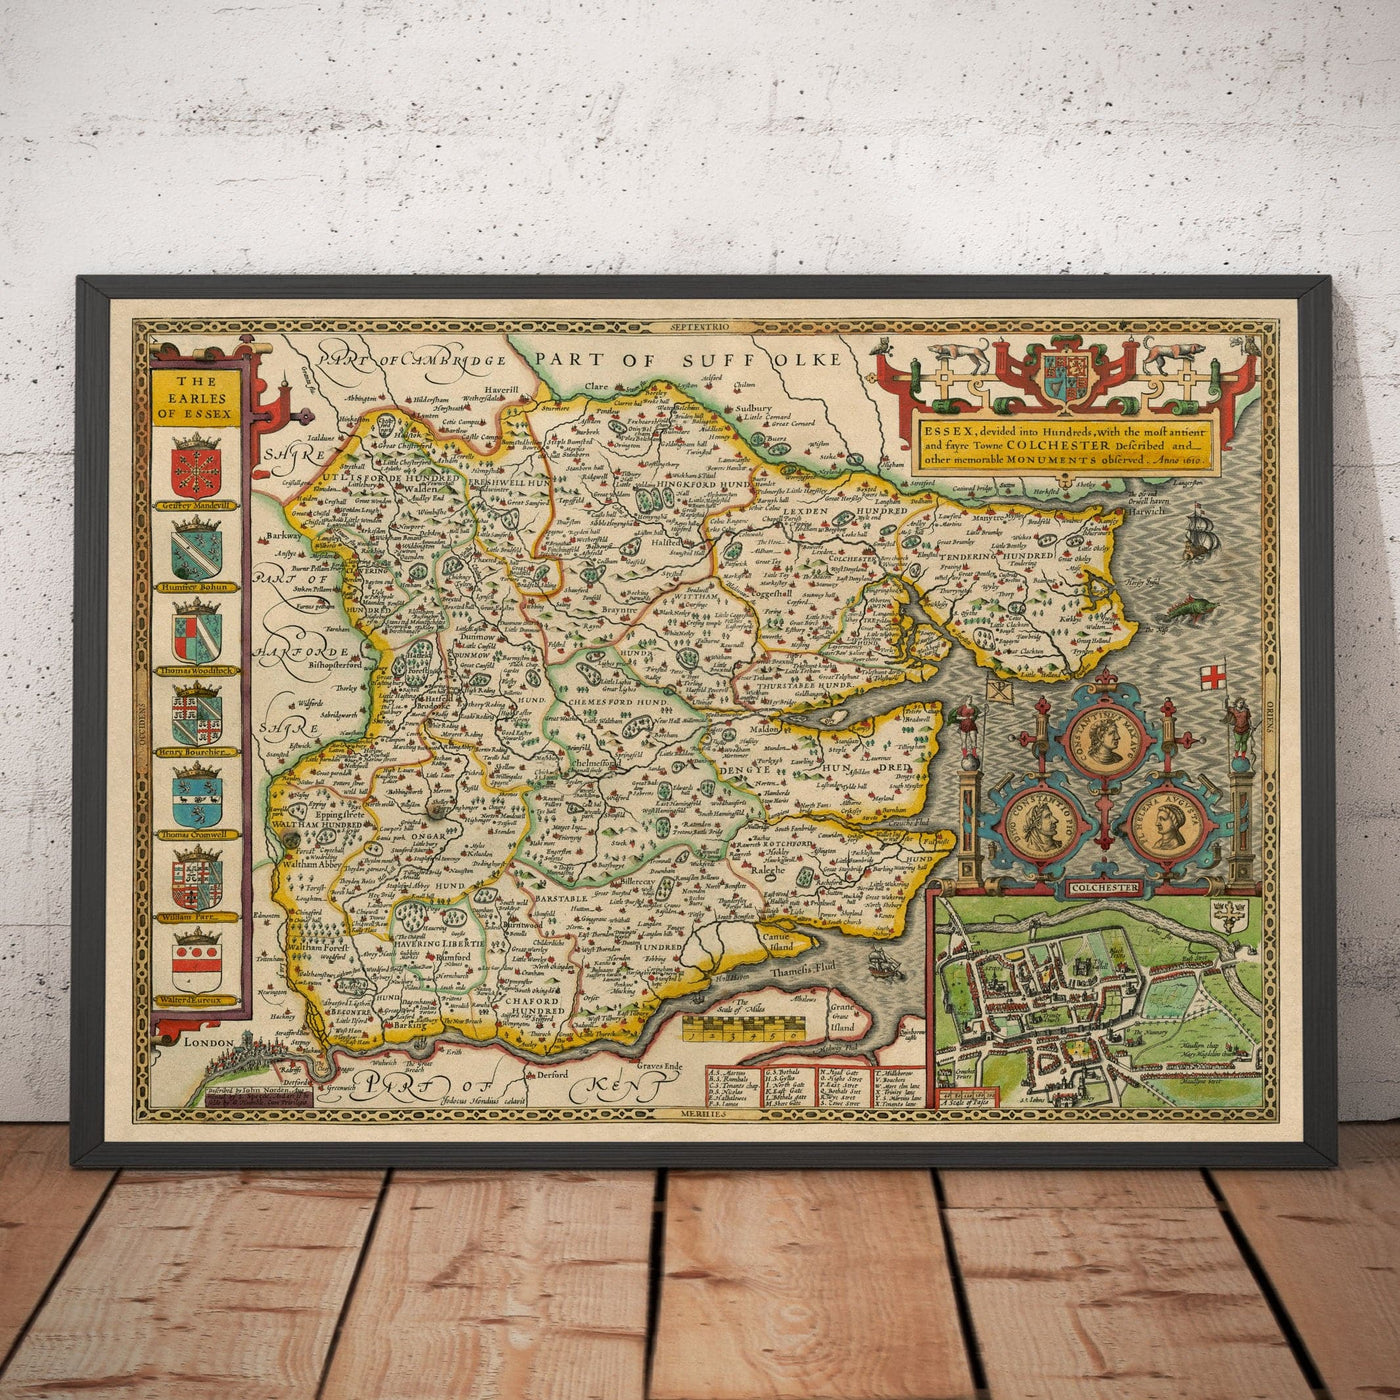 Ancienne carte d'Essex de John Vitesse 1611 - Southend, Colchester, Chelmsford, Basildon, Romford